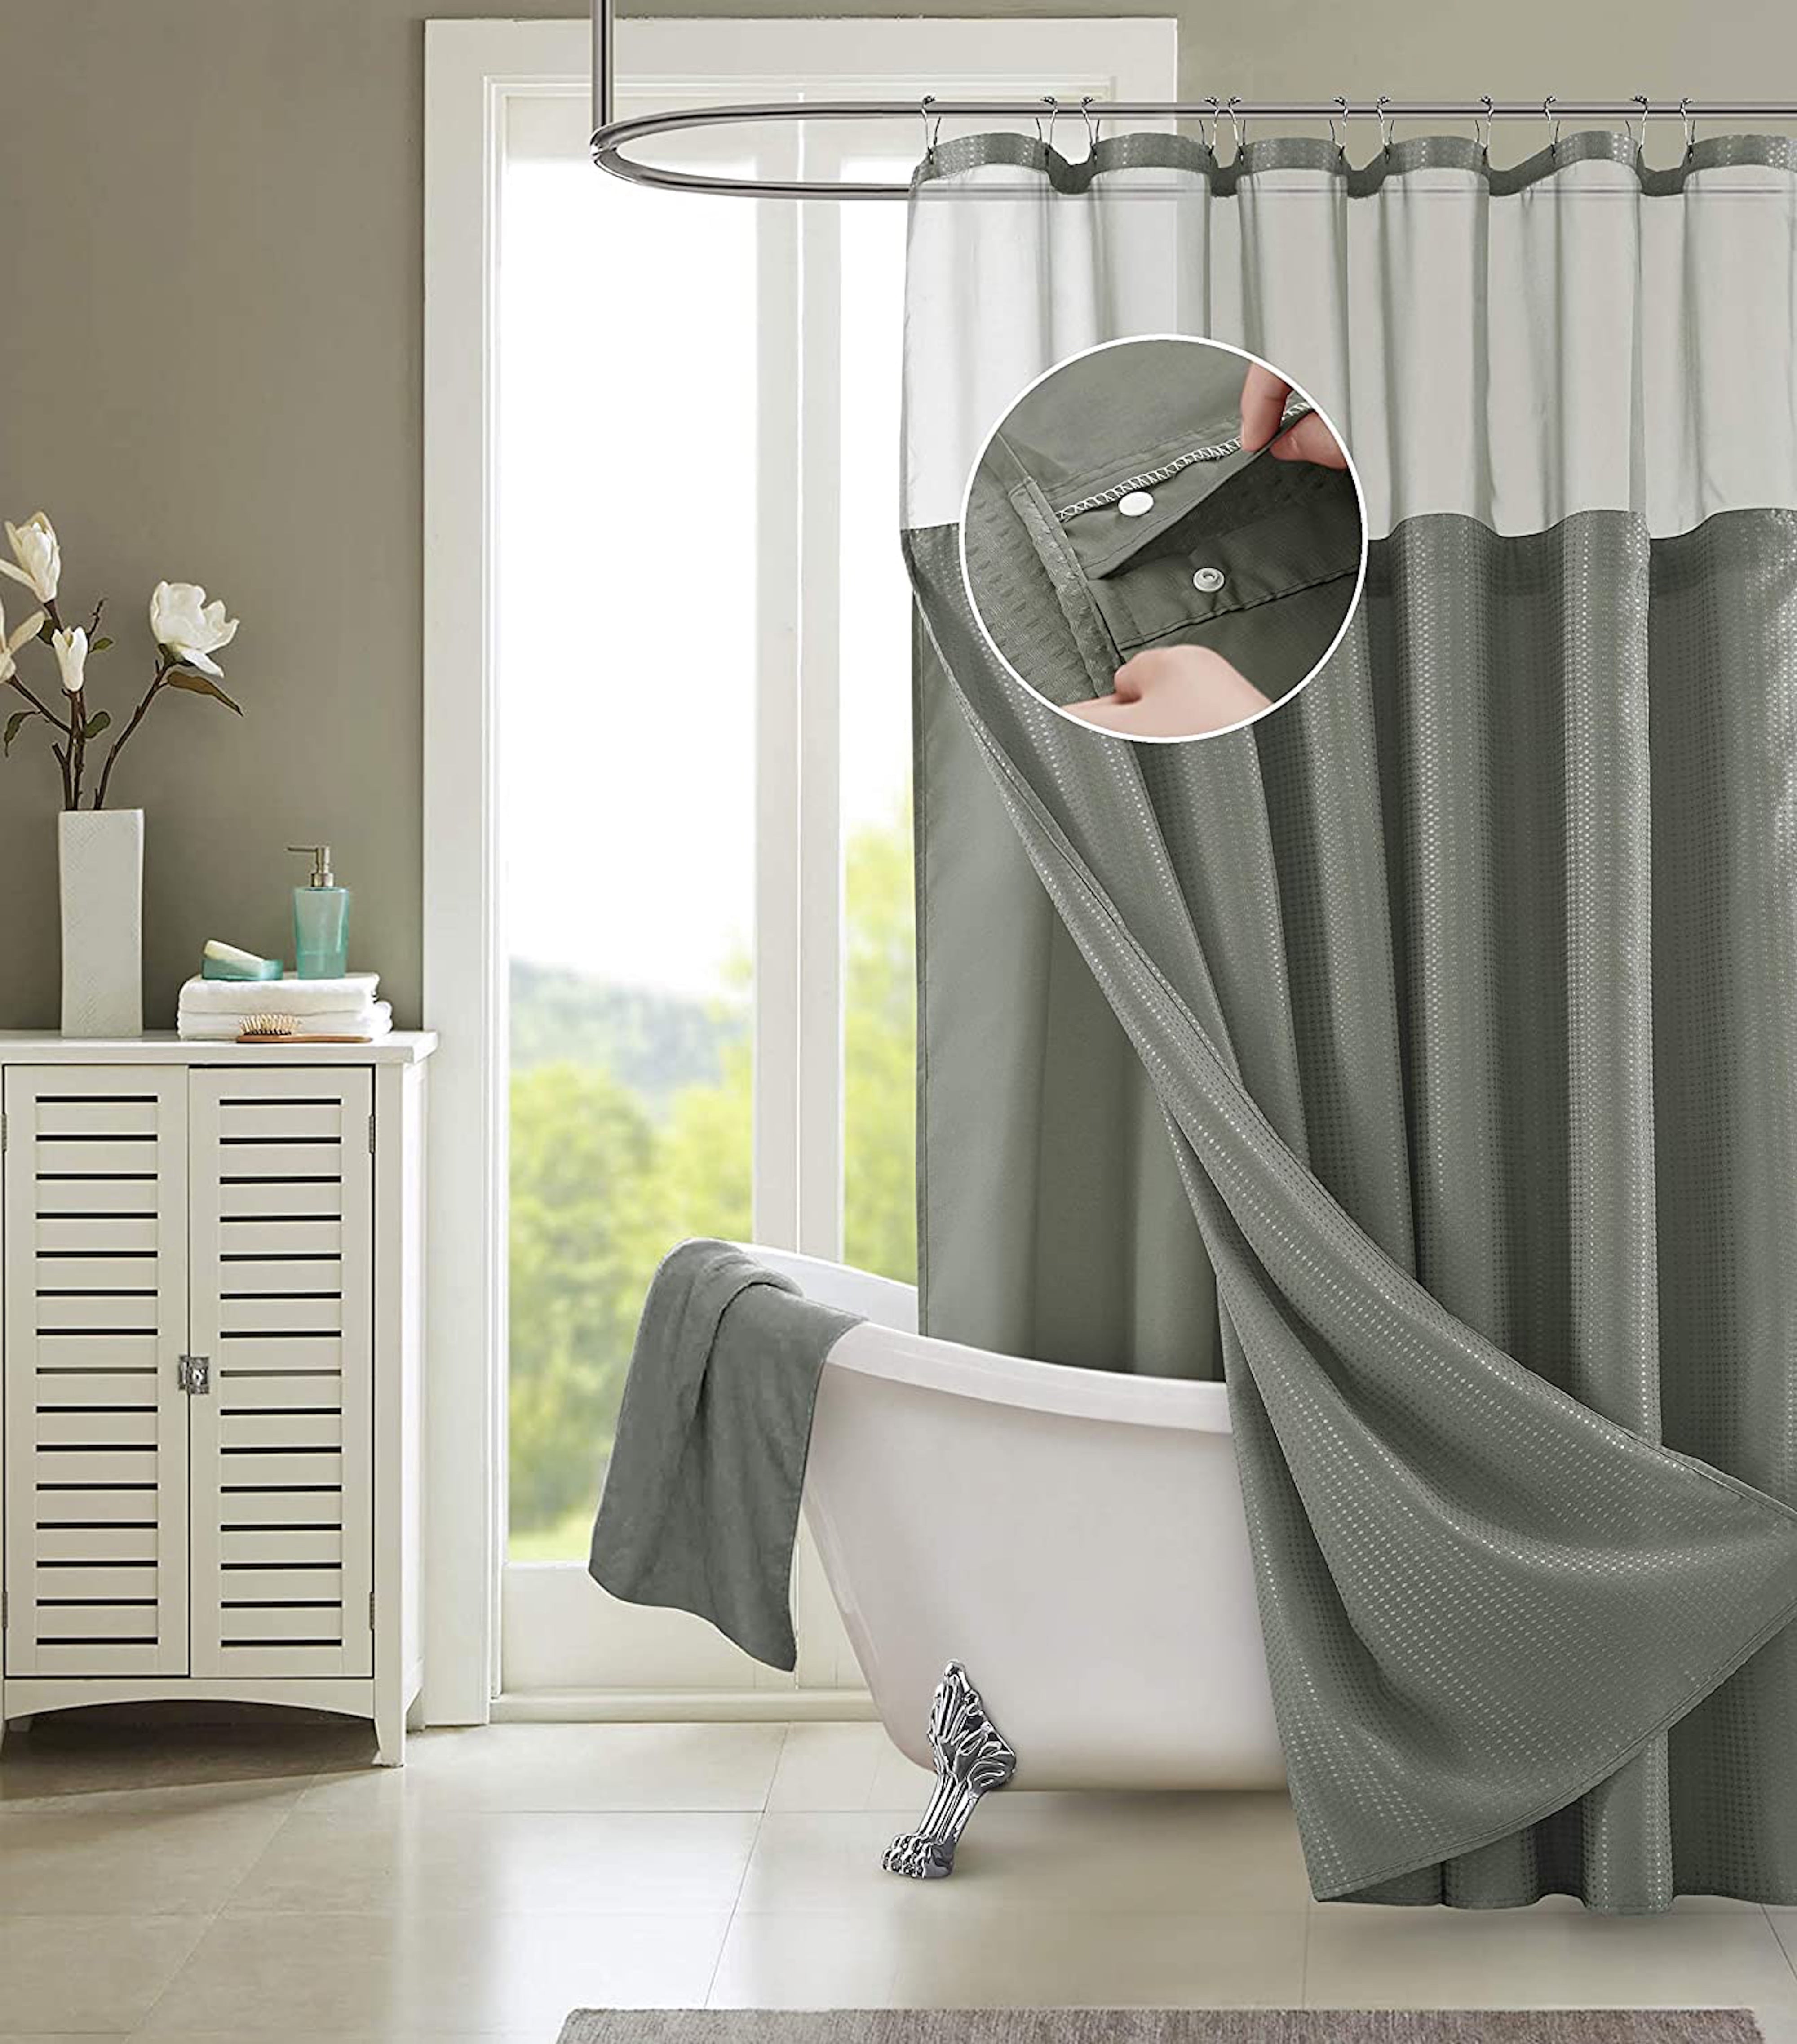 Color Musical Waterproof Bathroom Polyester Shower Curtain Liner Water Resistant 